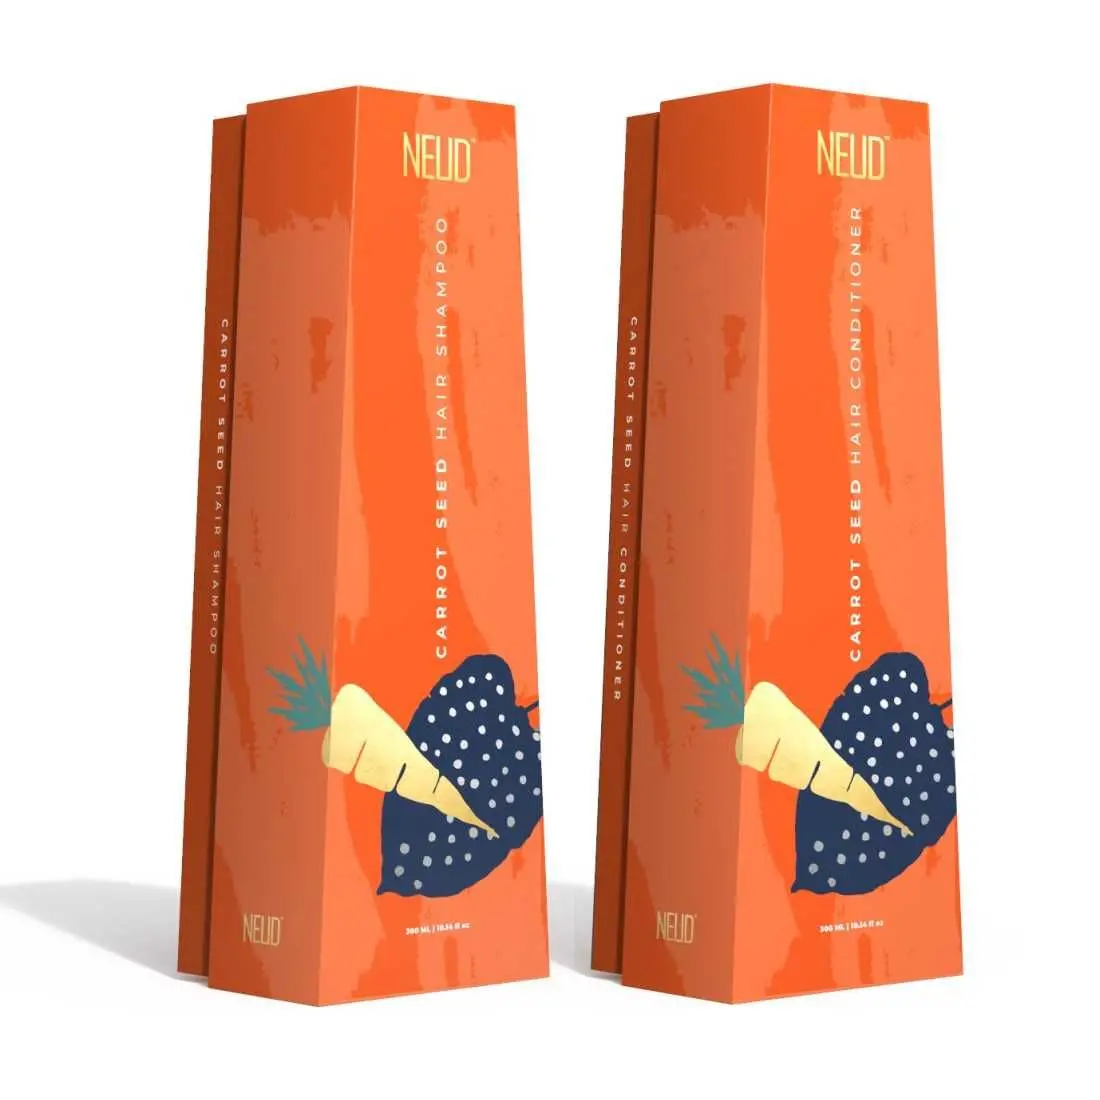 NEUD Carrot Seed Premium Shampoo & Hair Conditioner Combo for Men & Women (300 ml Each)